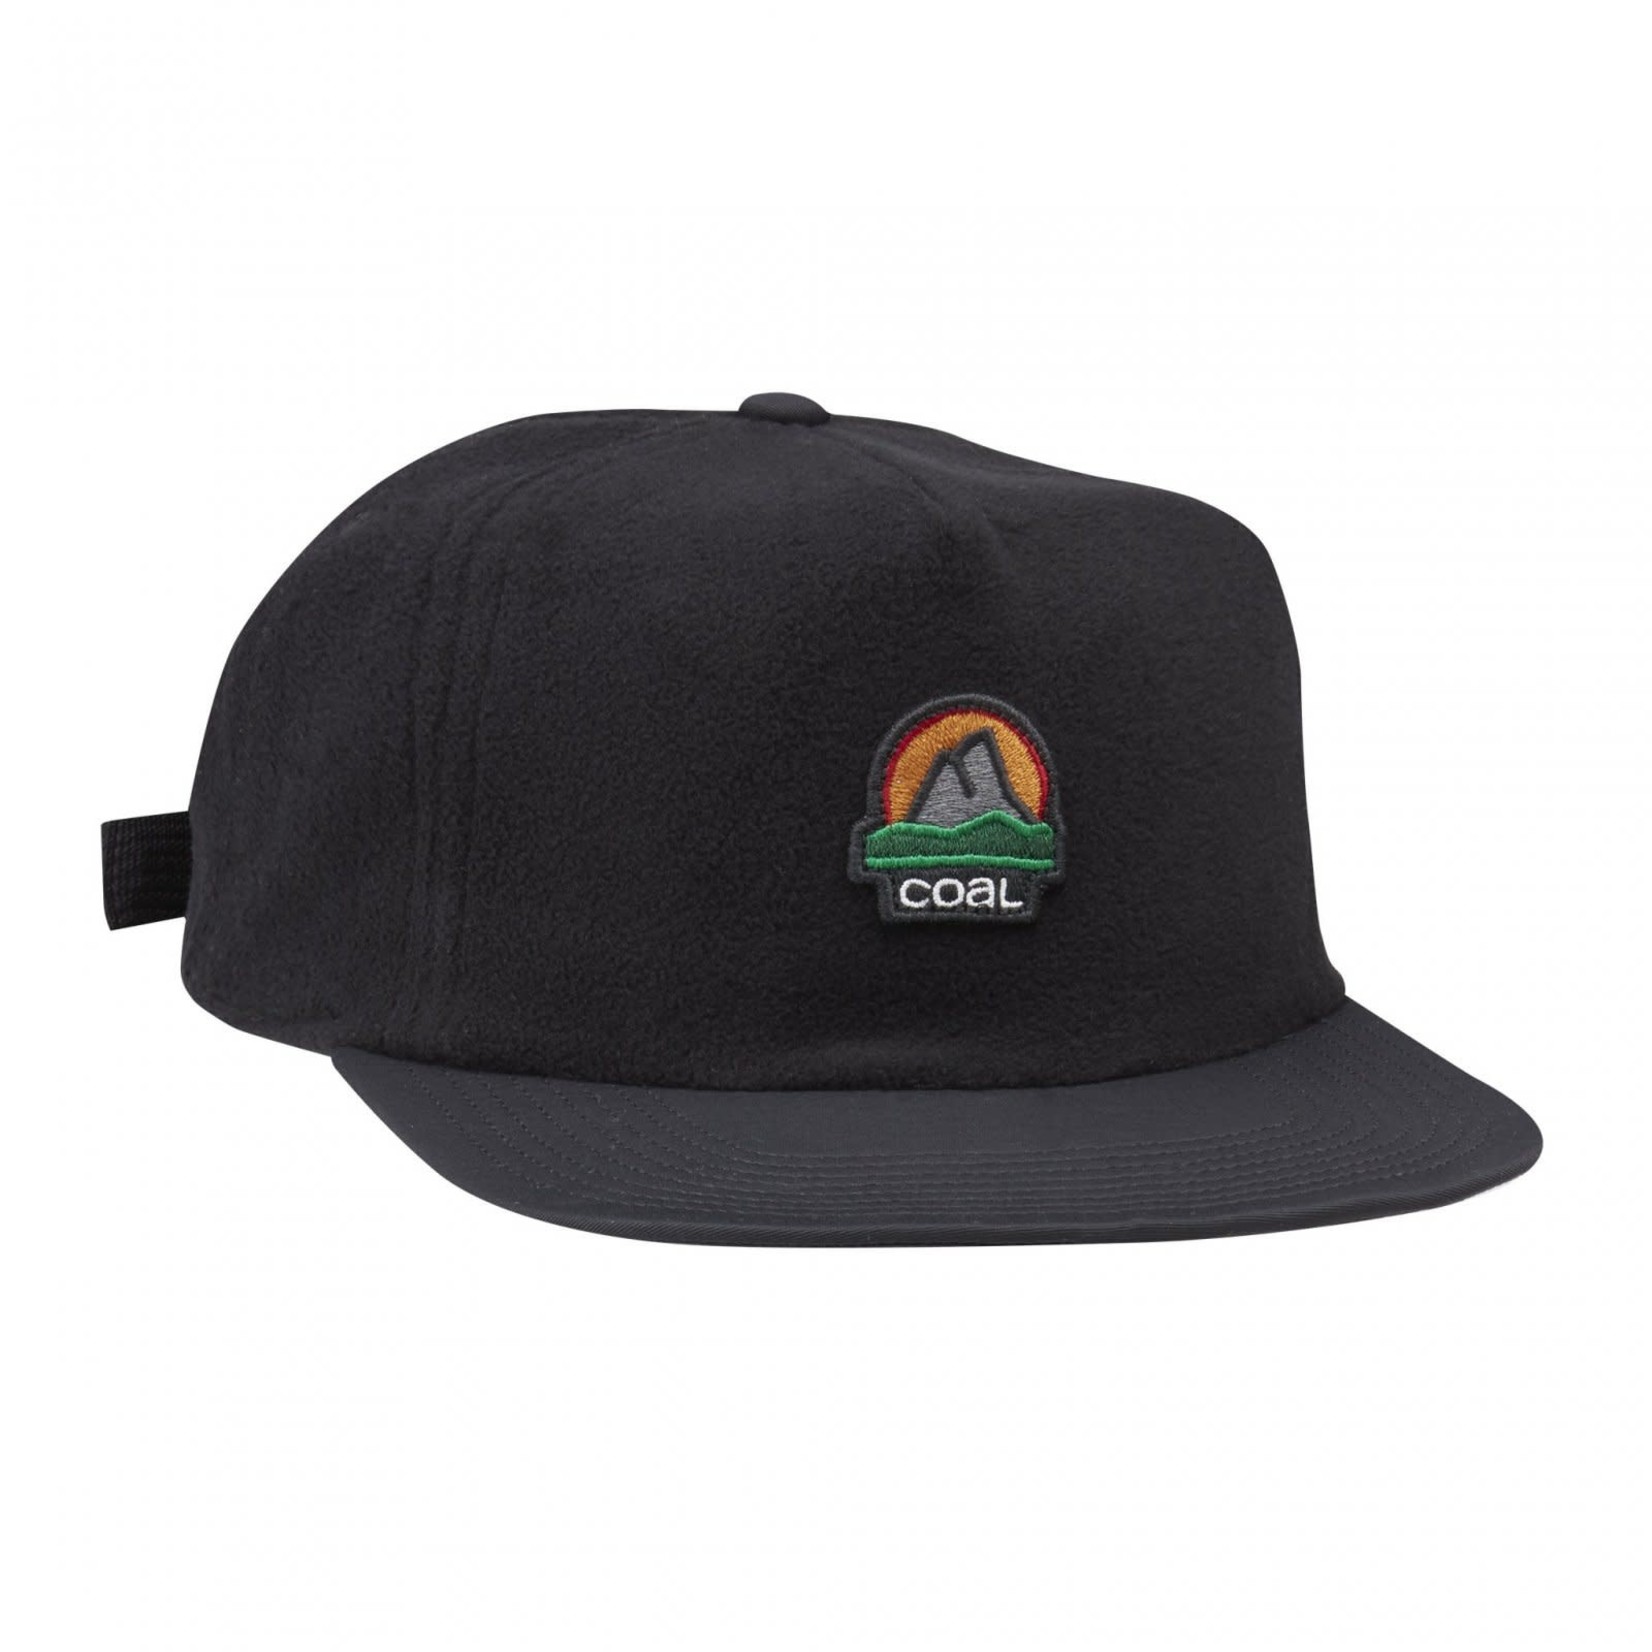 Coal Headwear Coal North Hat - Black